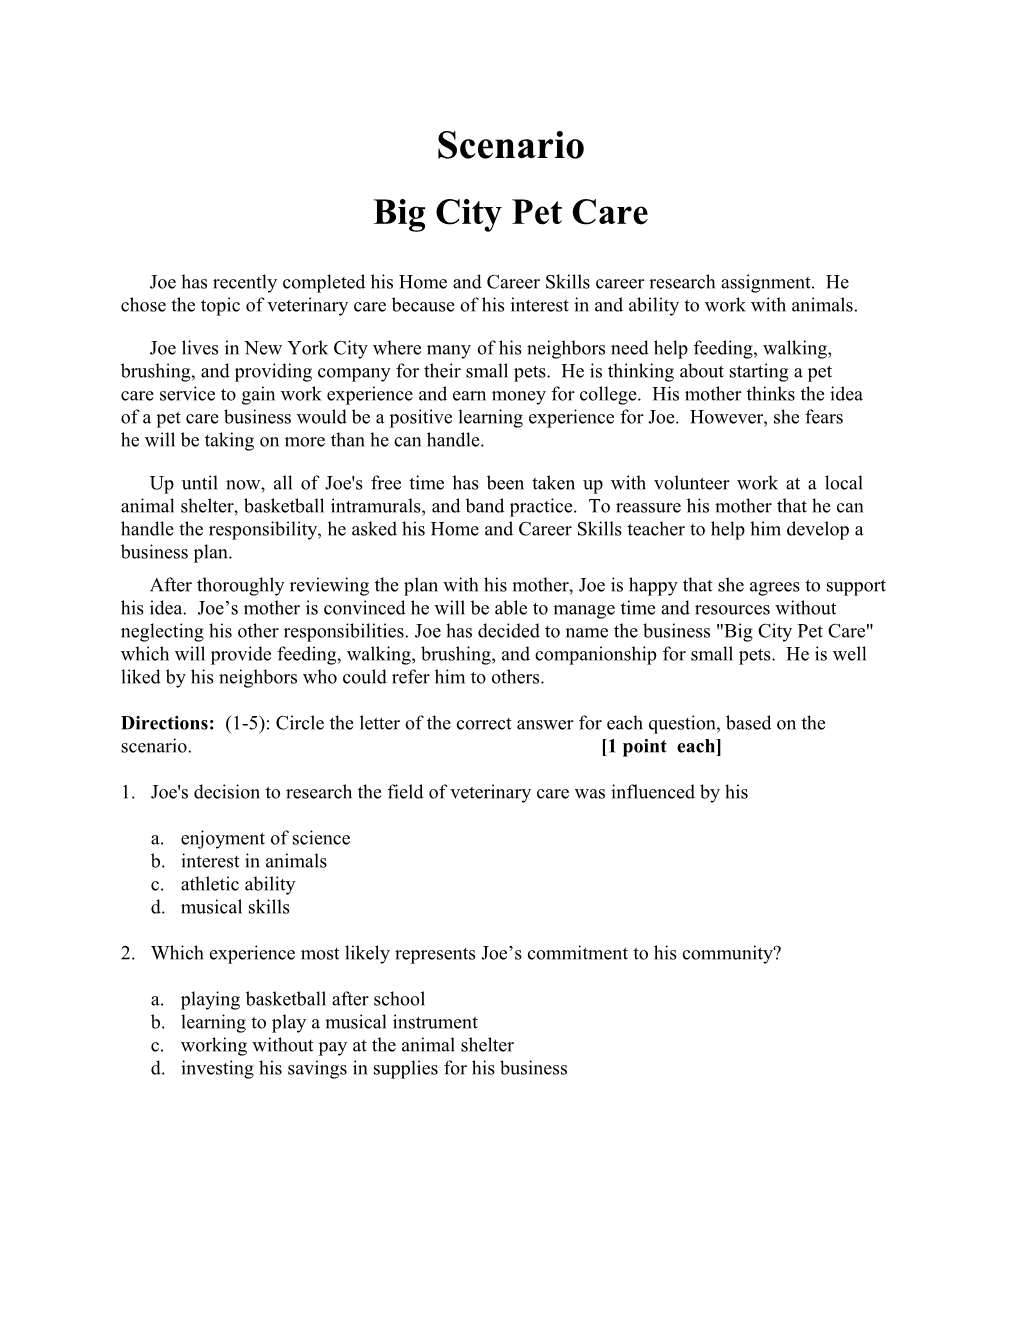 Big City Pet Care